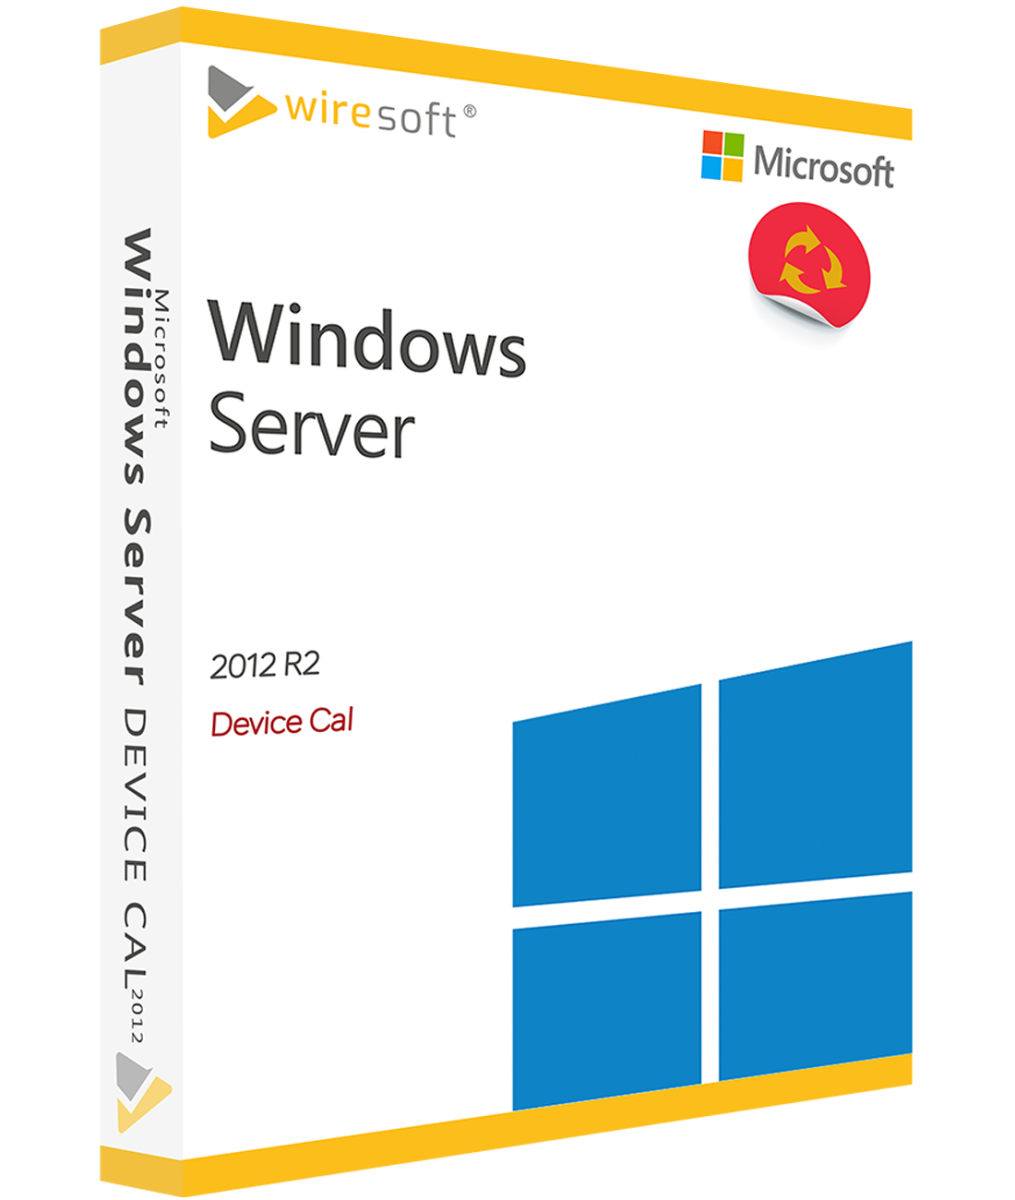 windows server 2012 remote desktop license 10 device cal